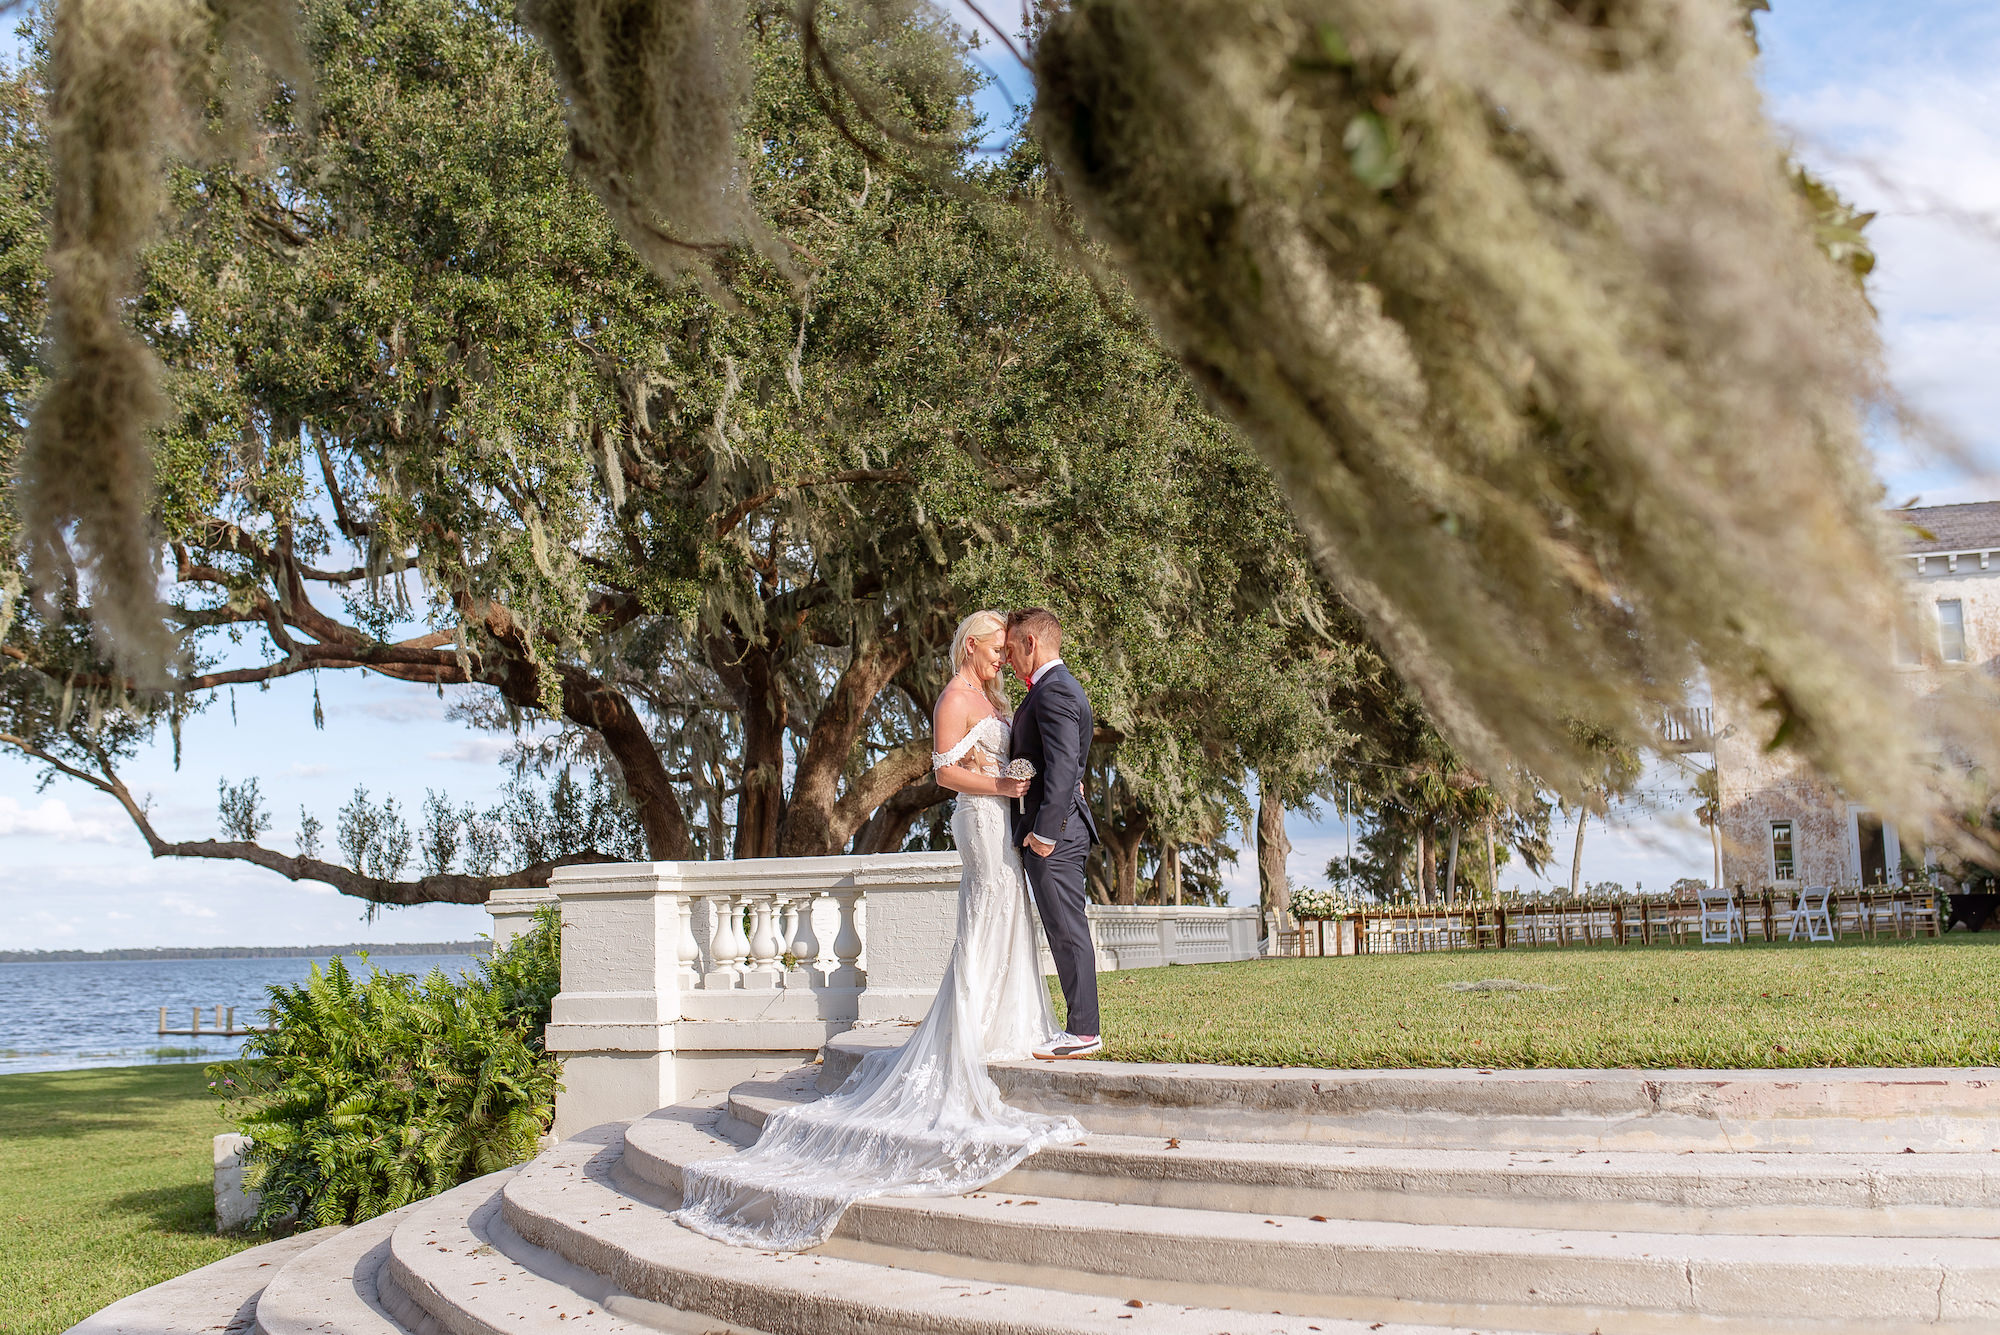 Intimate Bride and Groom Wedding Portrait | Central Florida Venue Bella Cosa | Tampa Bay Wedding Photographer Kristen Marie Photography